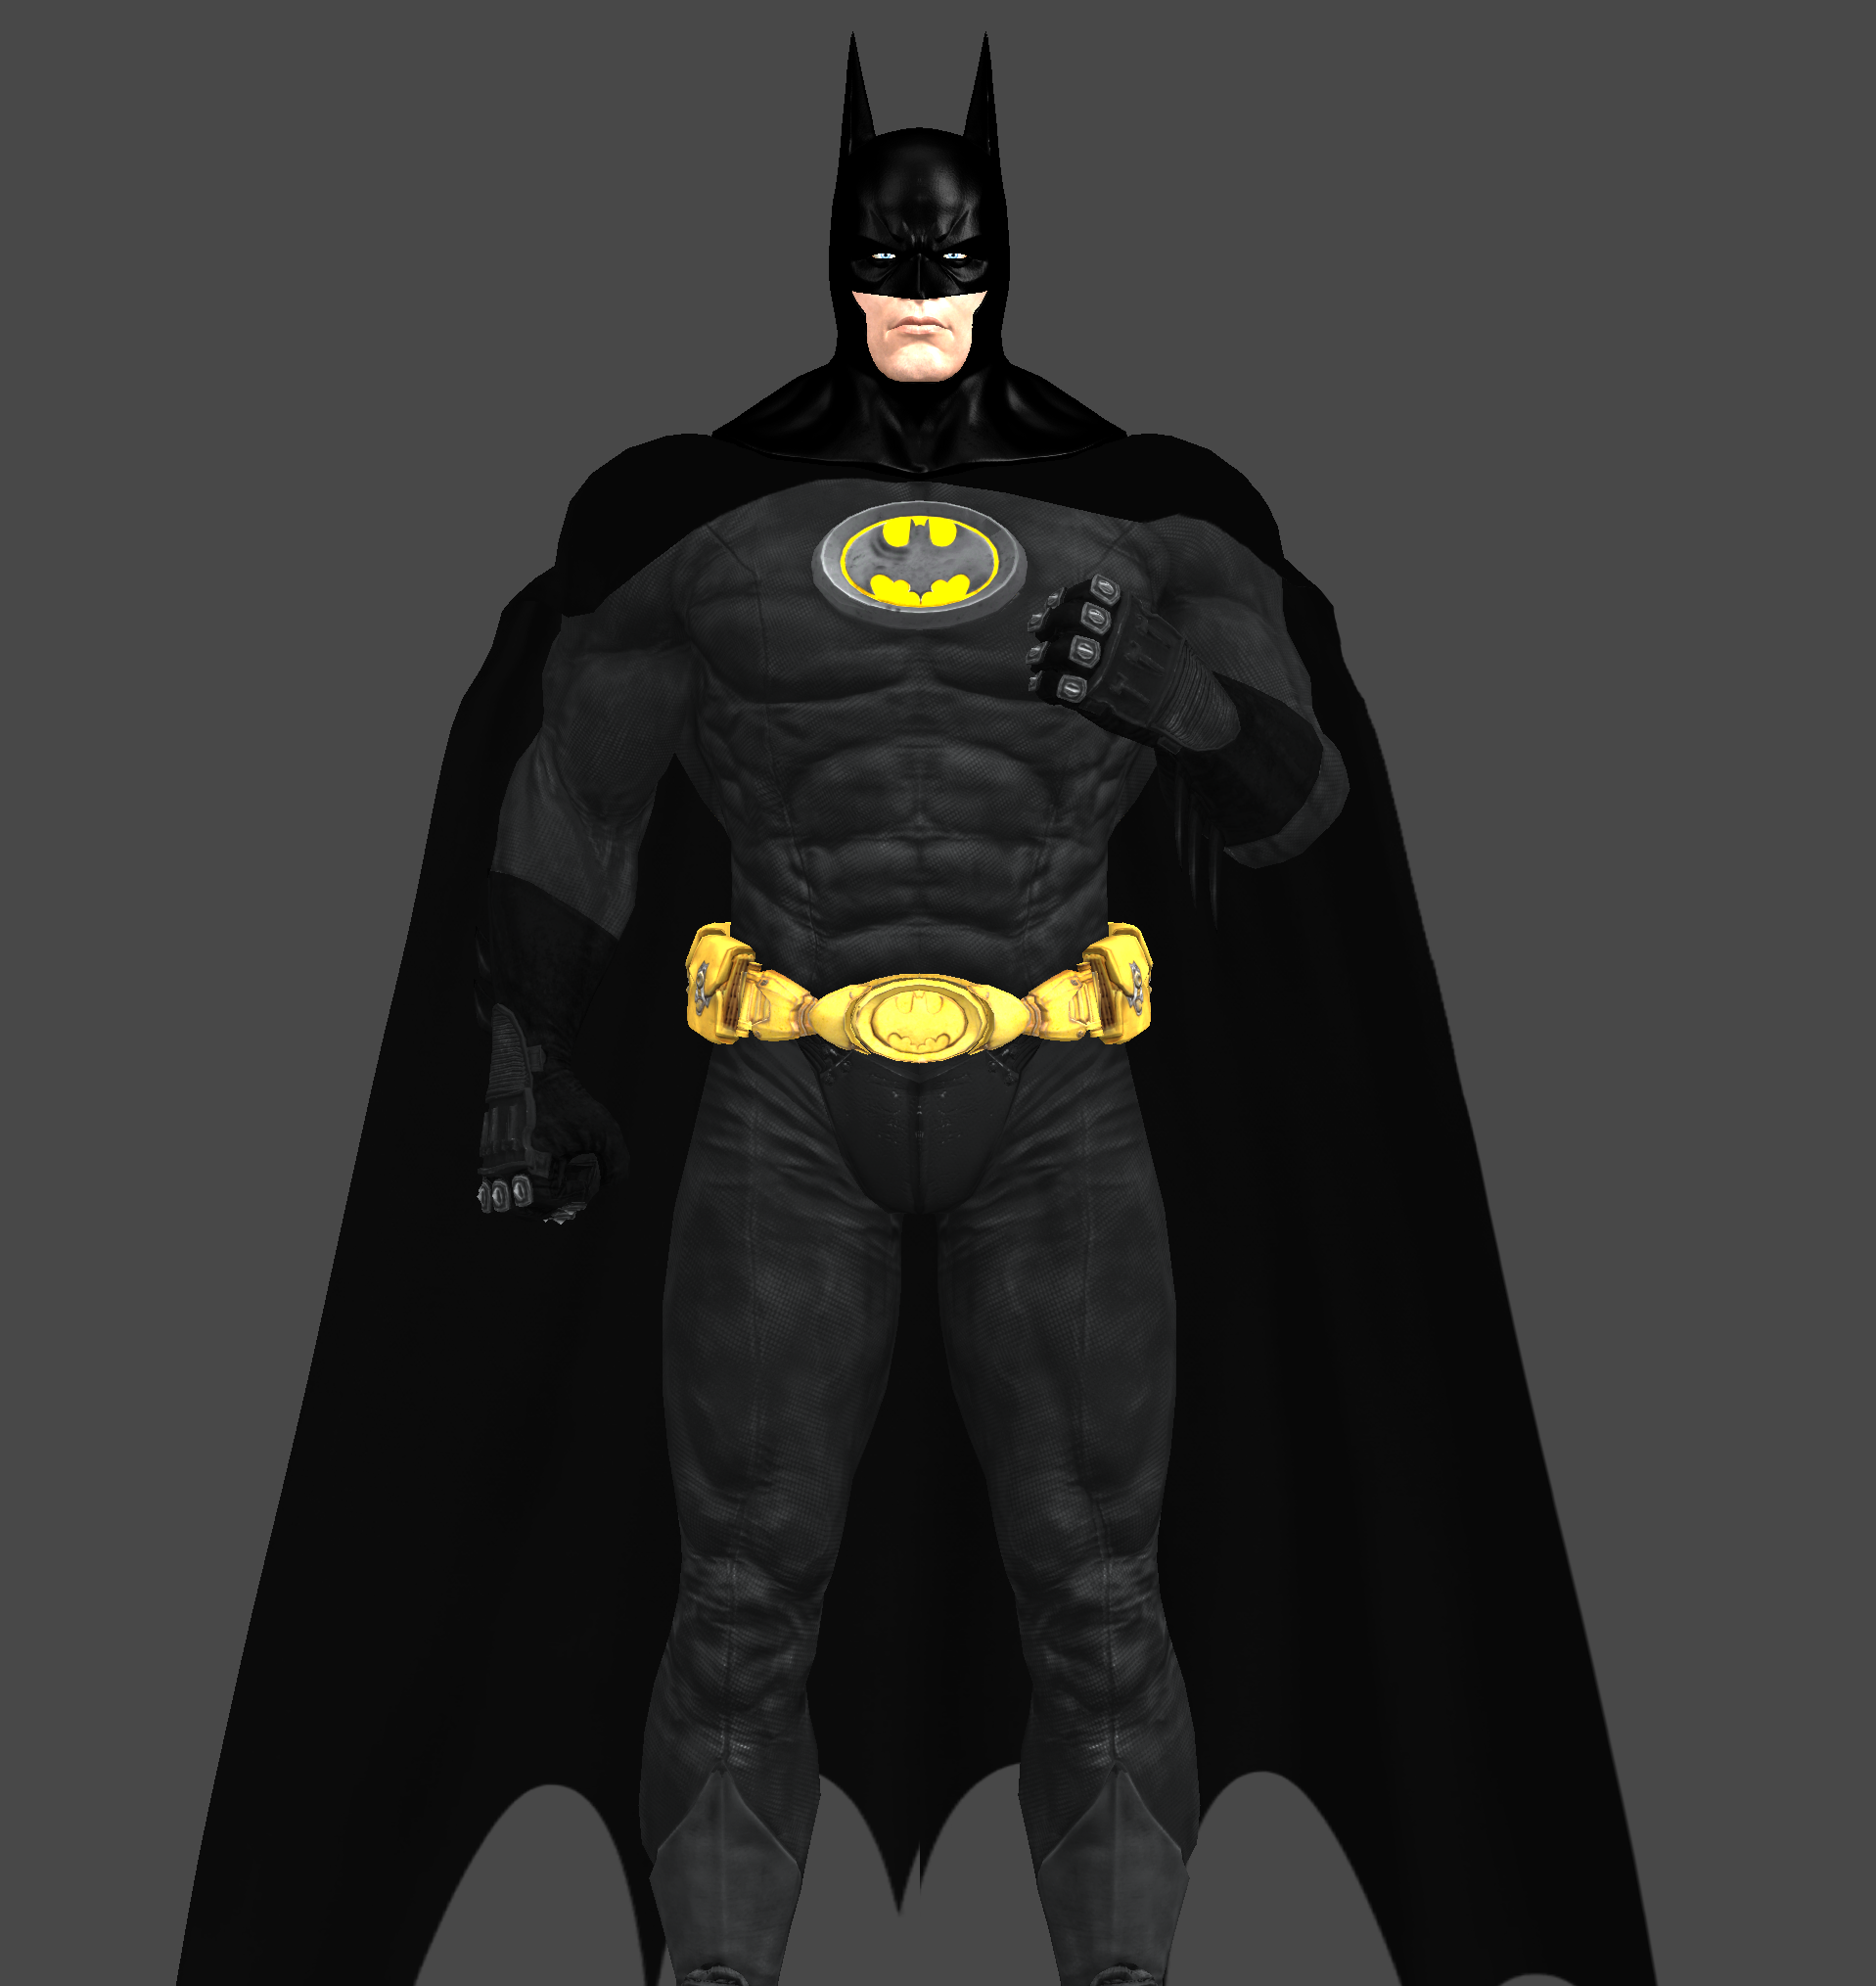 BAC: Batman Inc (1989 Suit) by Jckspacy on DeviantArt